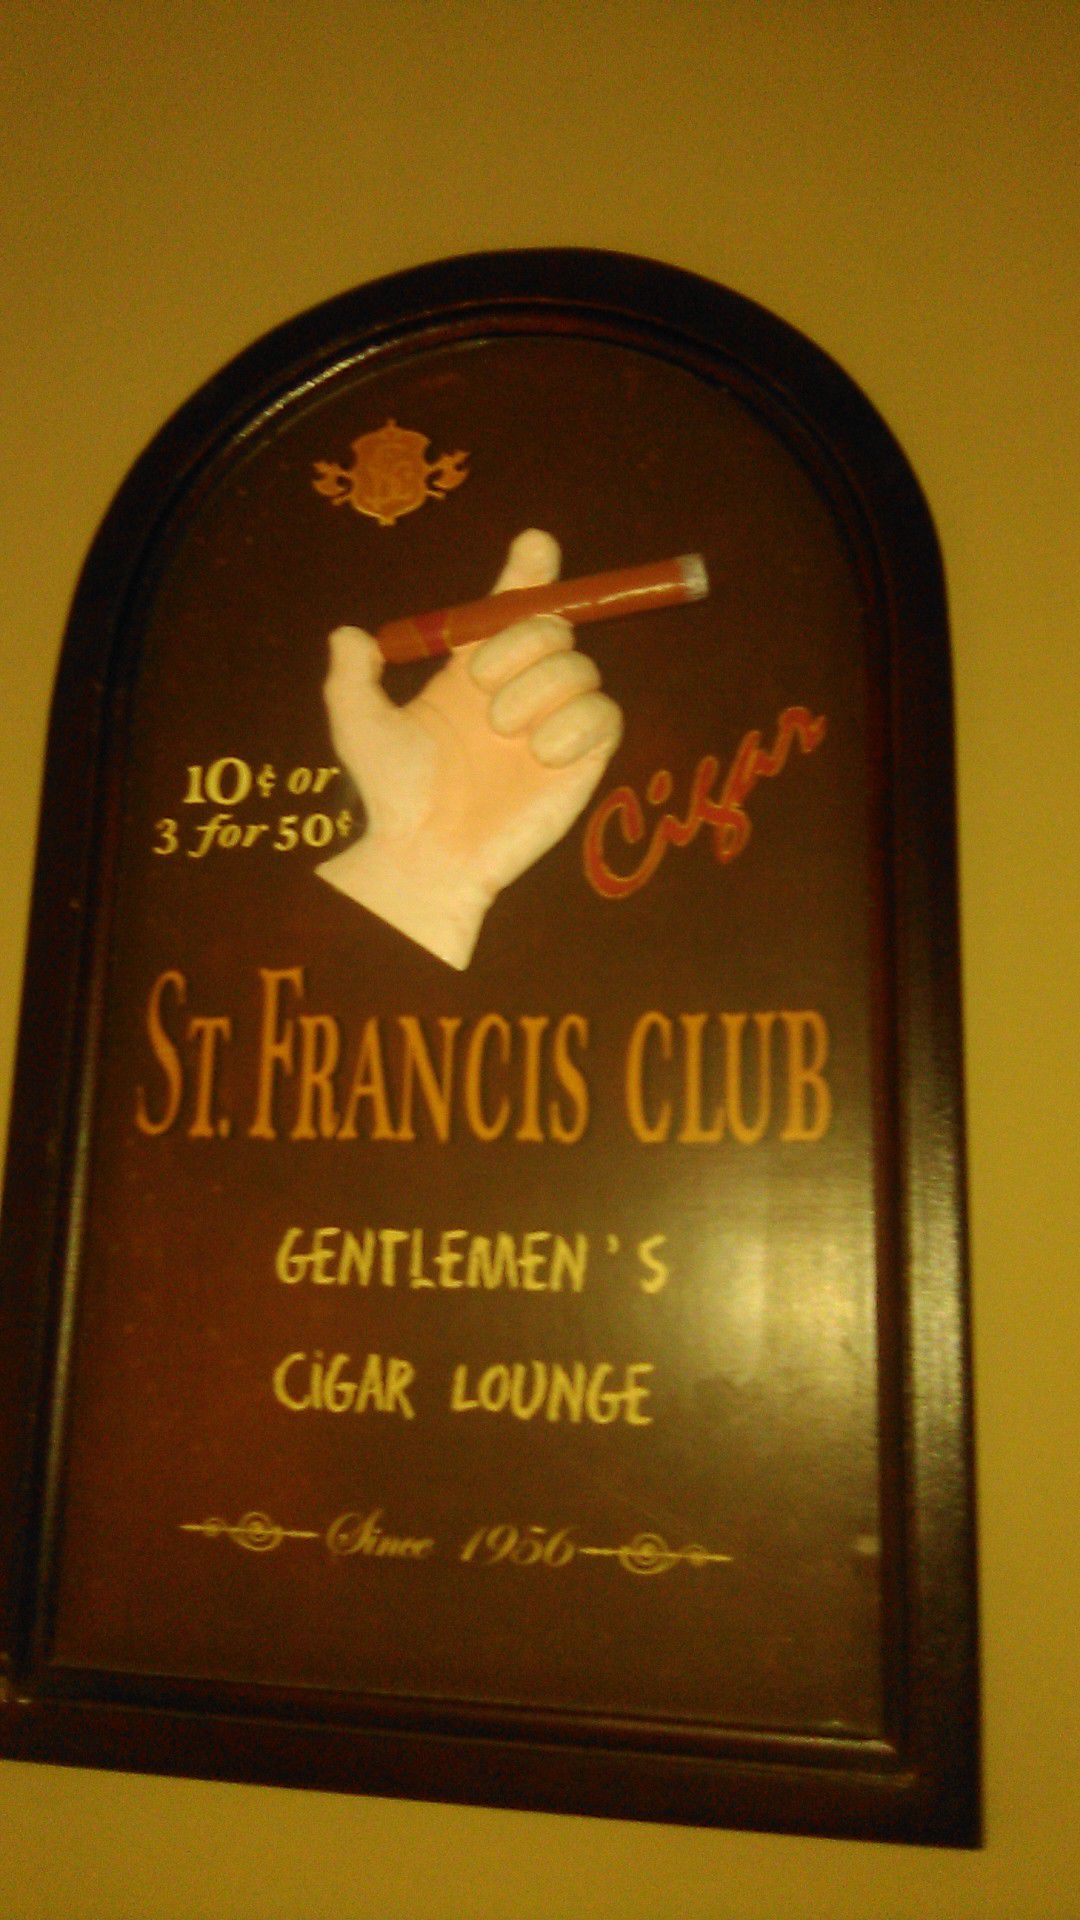 Cool cigar sign